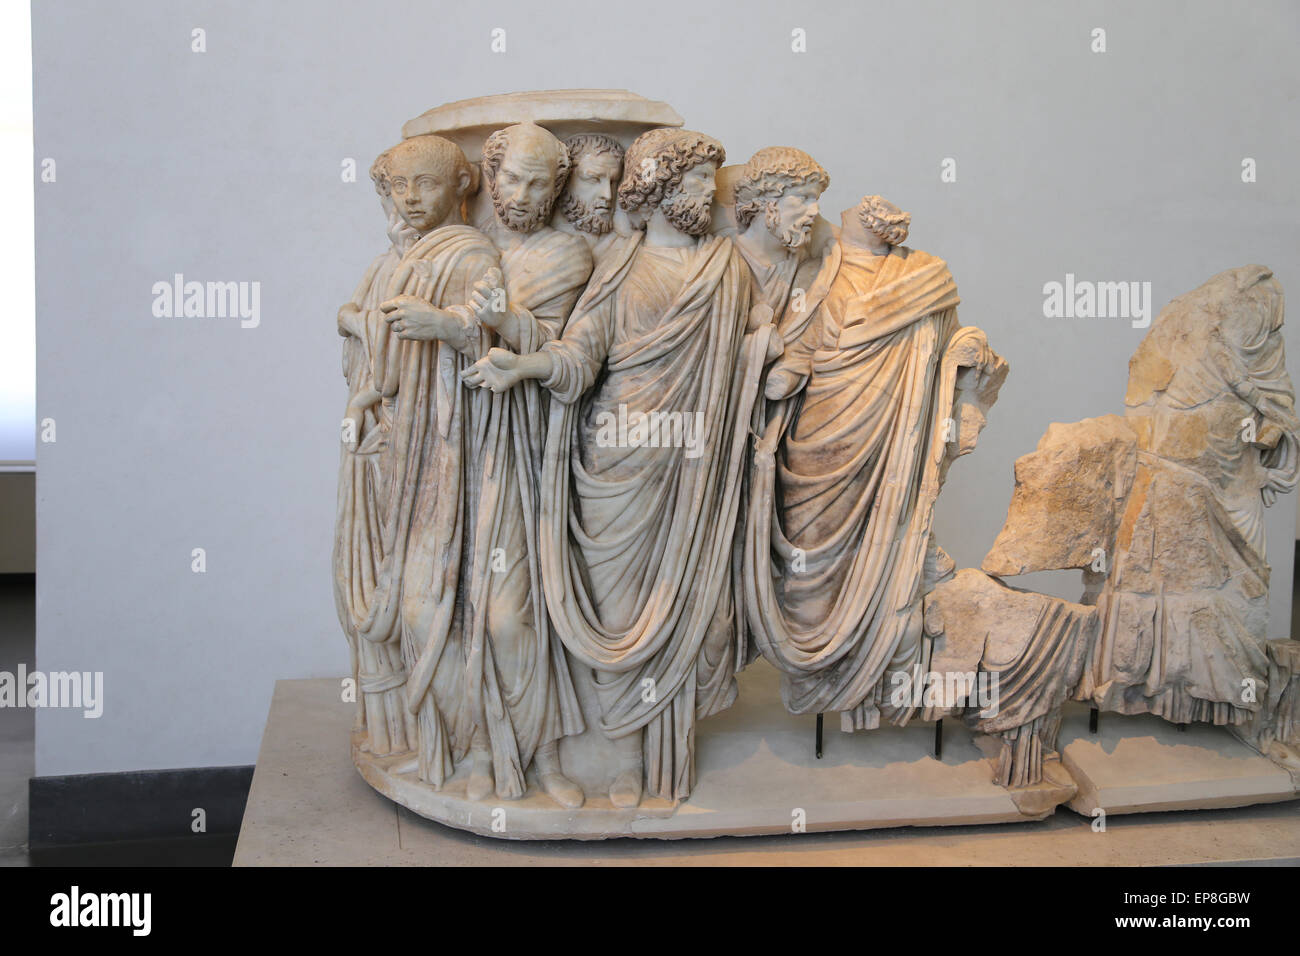 A lenos sarcophagus with processus consularis. Roman. 270 AD. National Roman Museum. Palace Massimo. Rome. Italy. Stock Photo